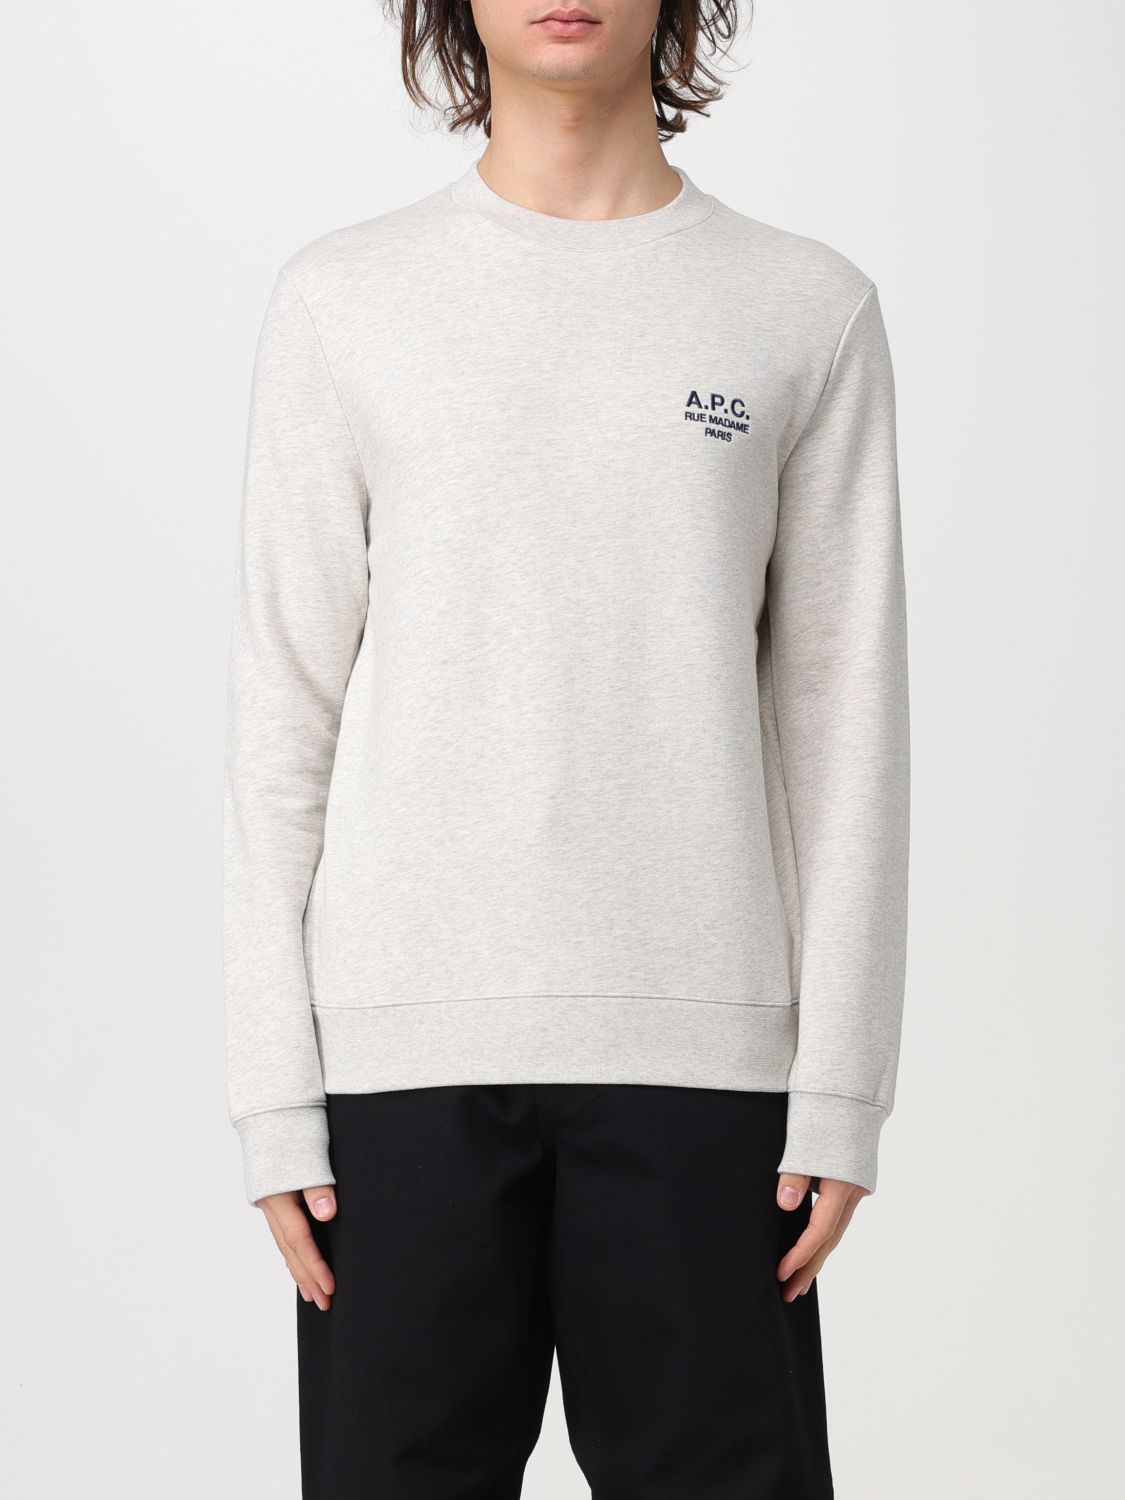 Apc Sweatshirt A.p.c. Herren Farbe Weiss In White